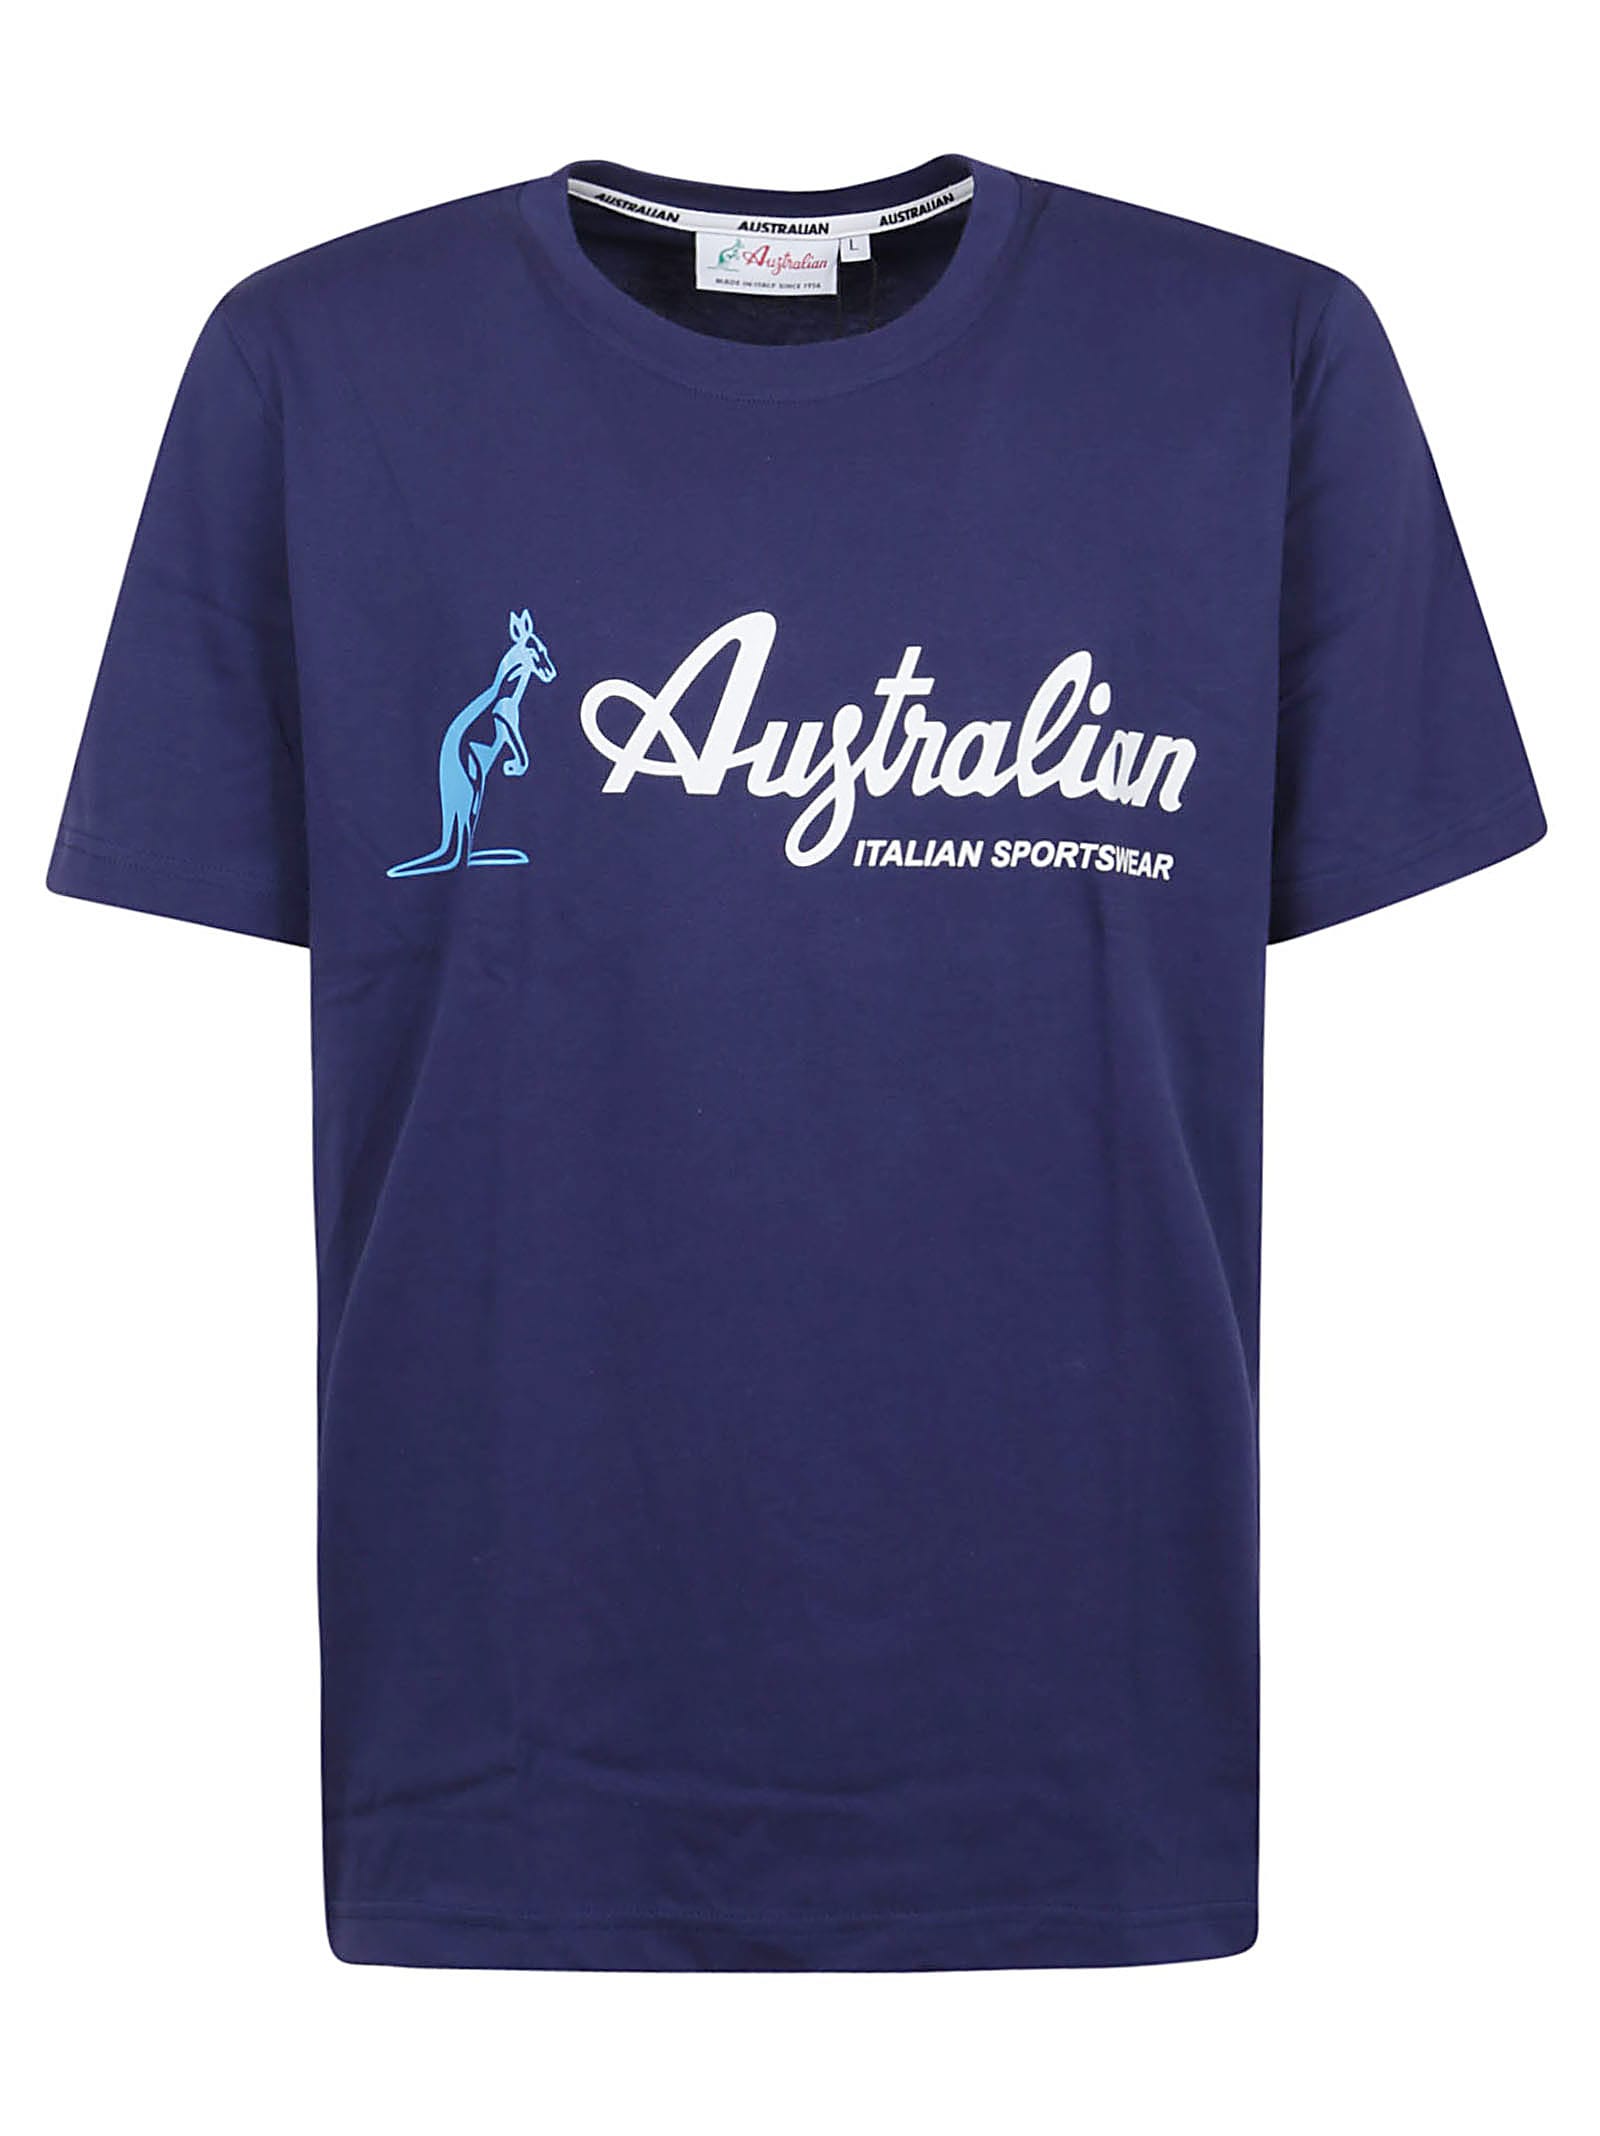 Australian Sportswear Printed T-shirt